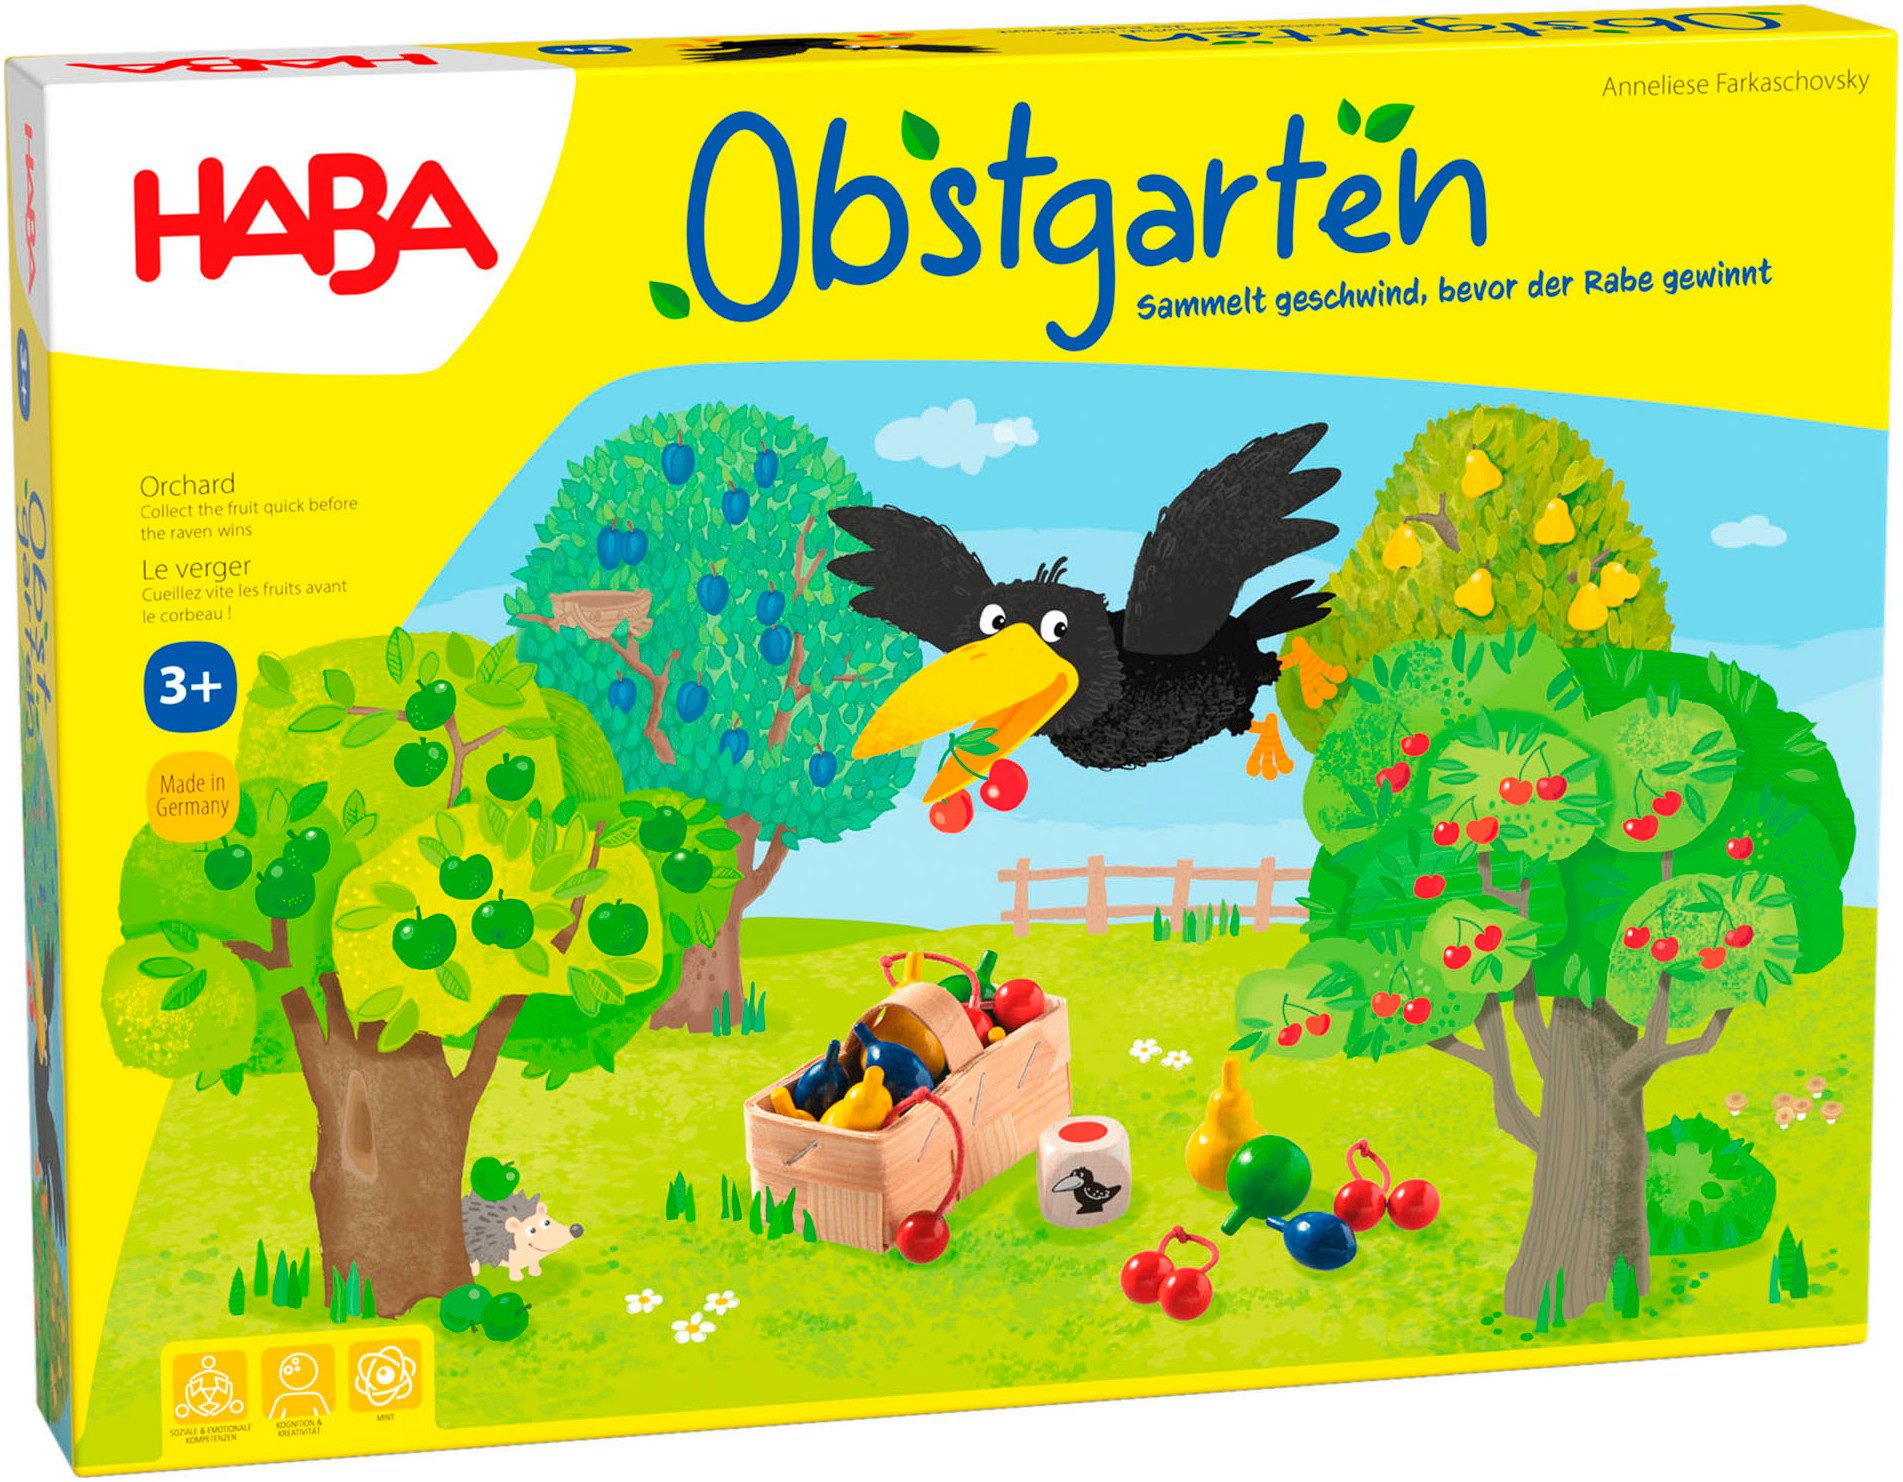 Haba Spiel, Obstgarten, Made in Germany